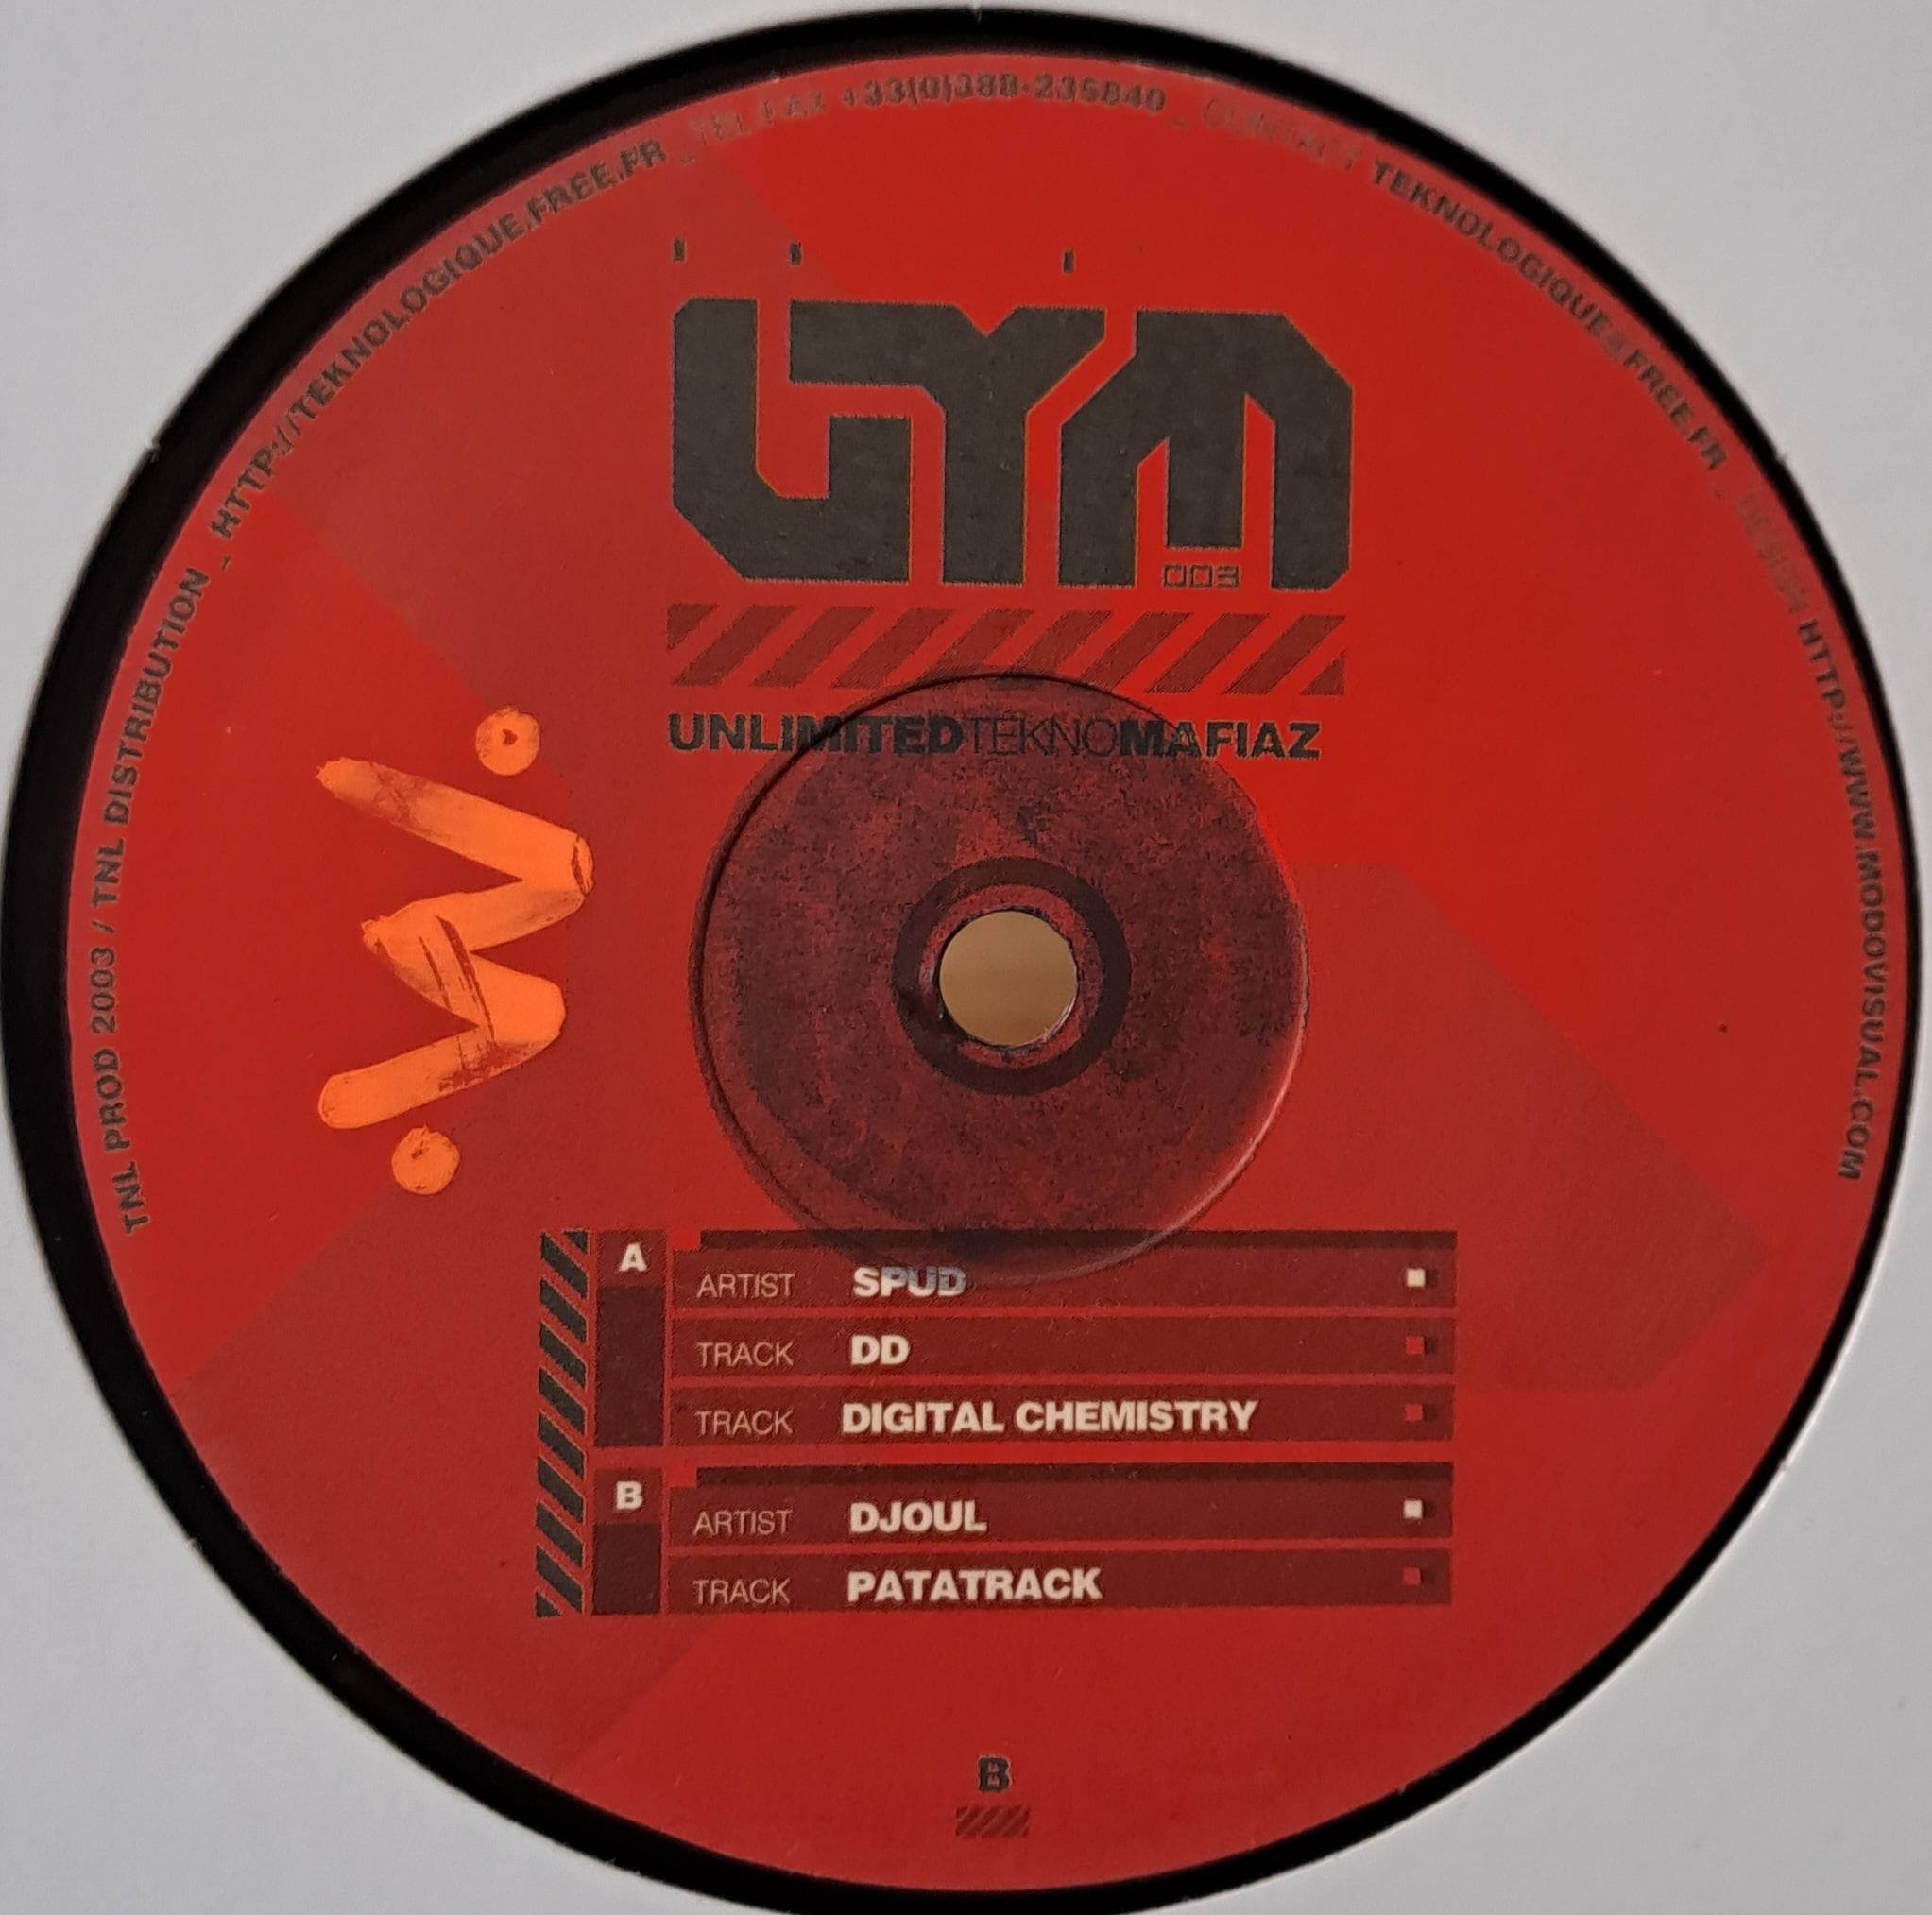 Unlimited Tekno Mafiaz 03 - vinyle freetekno